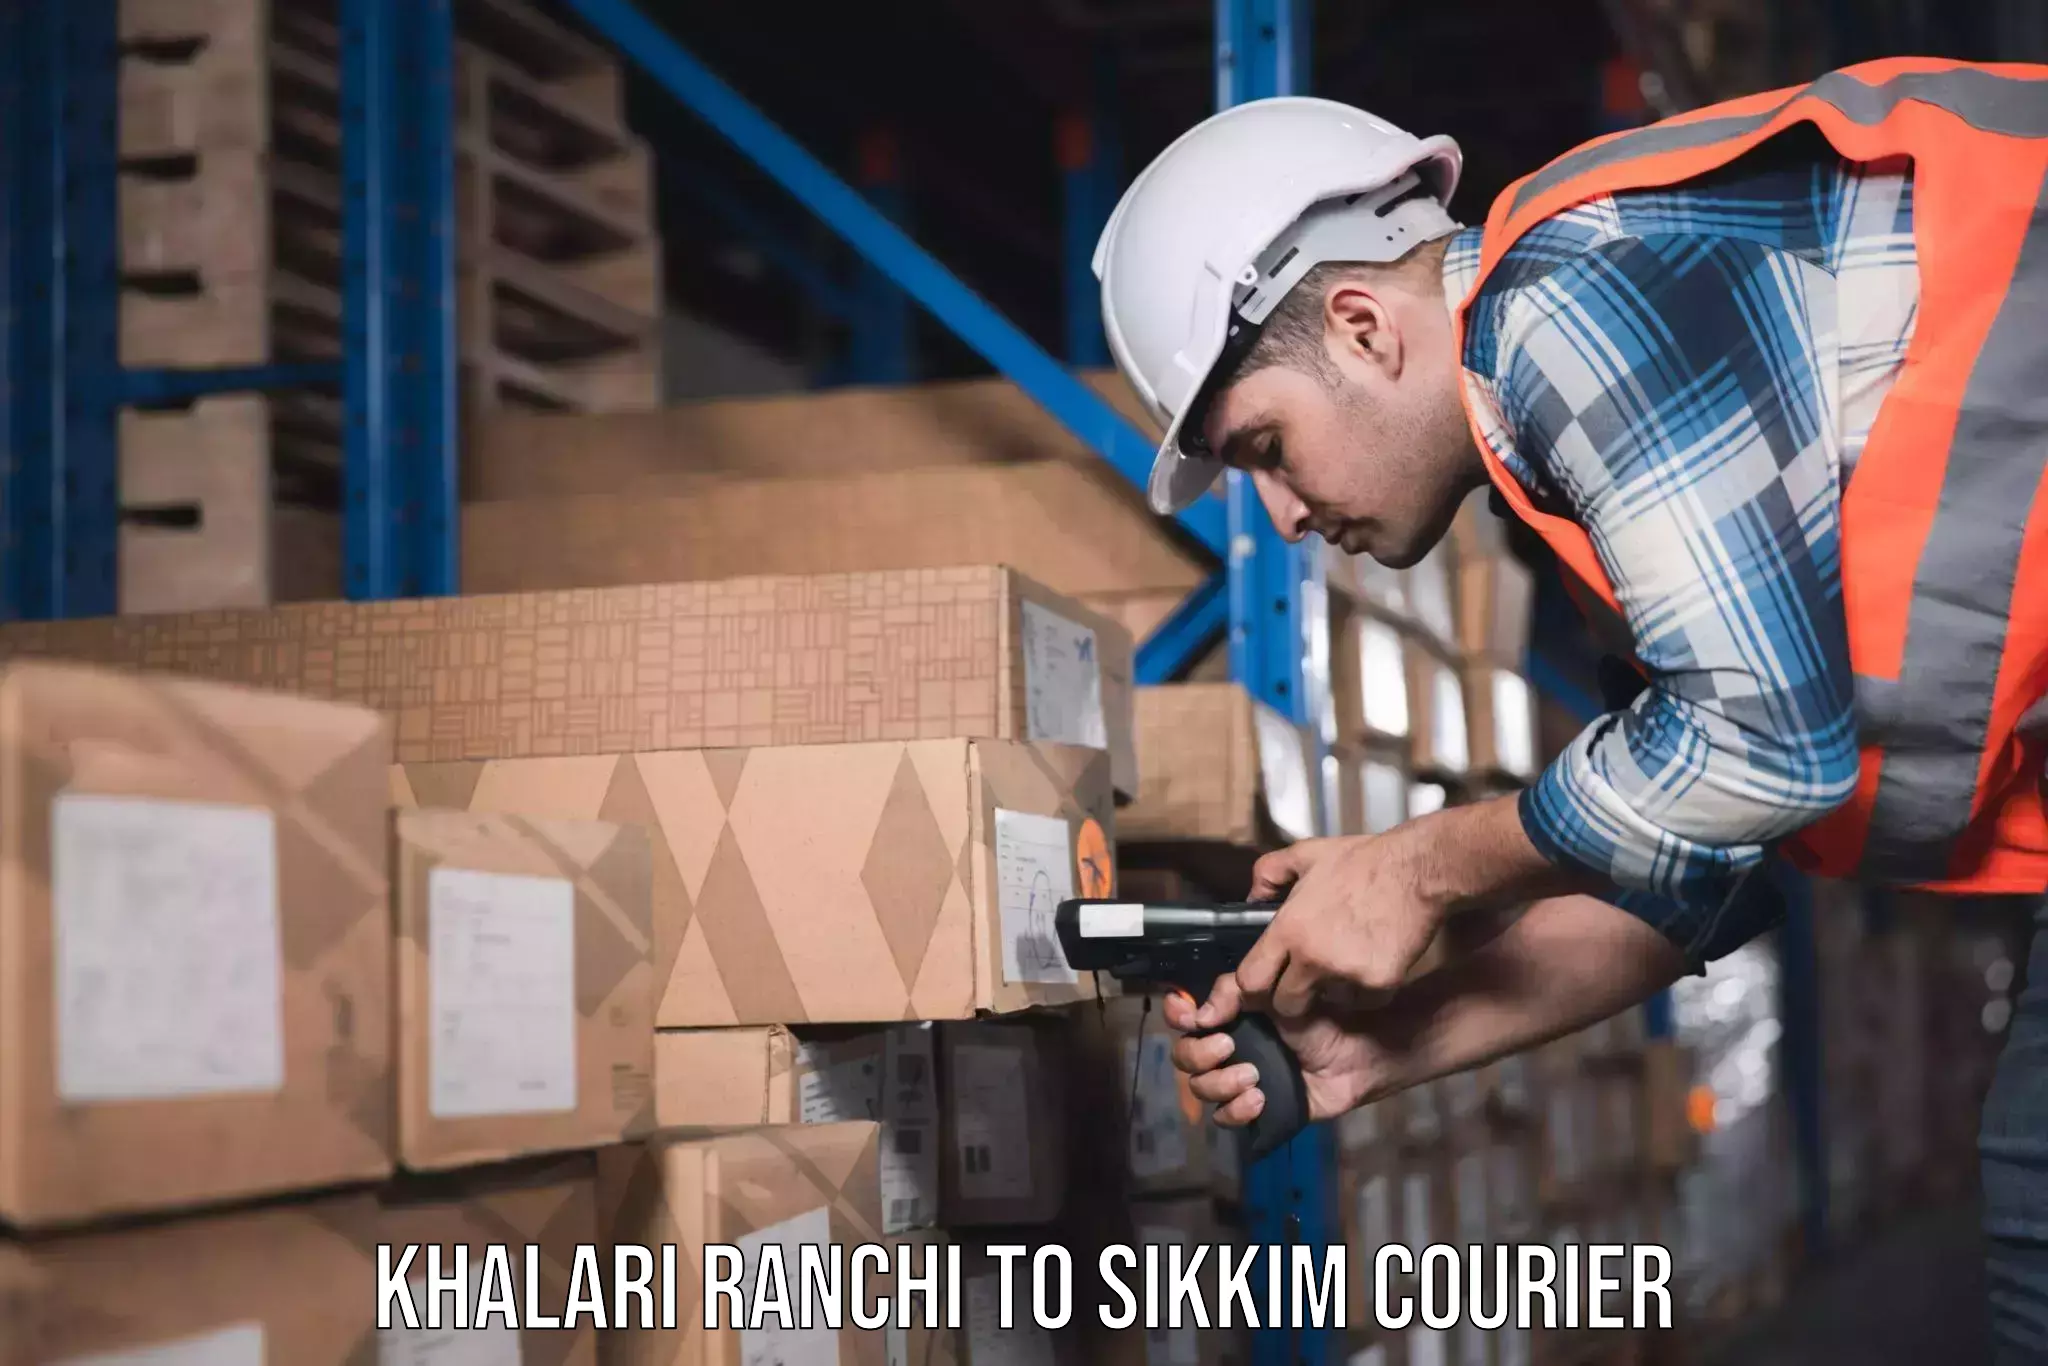 Specialized moving company Khalari Ranchi to Pelling